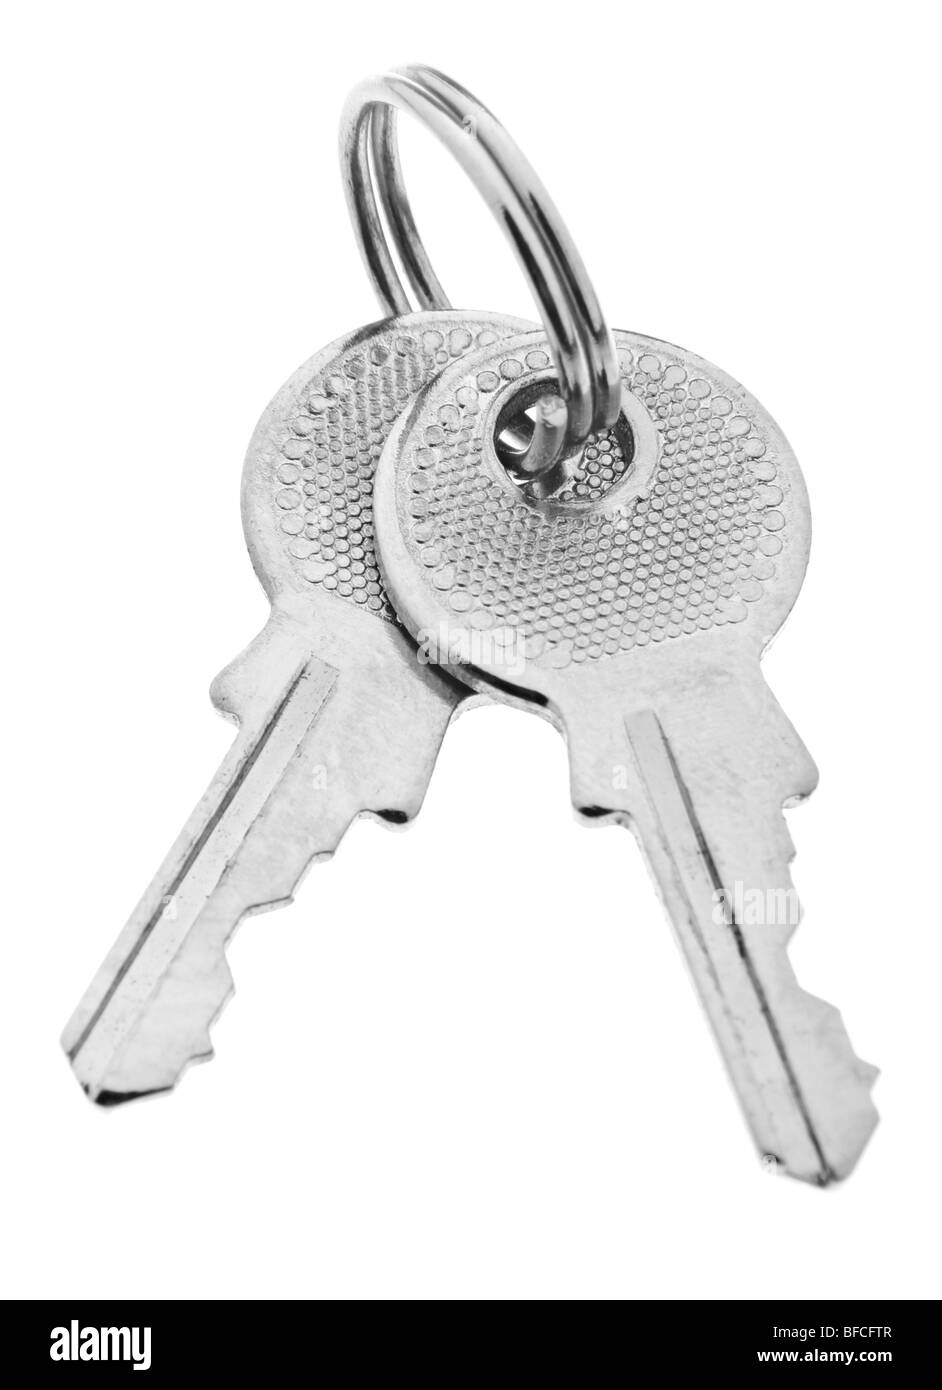 Small key. Маленький ключ. Маленький ключик. Нужен ключ для маленьких замков. Ключ маленький с пластиком.